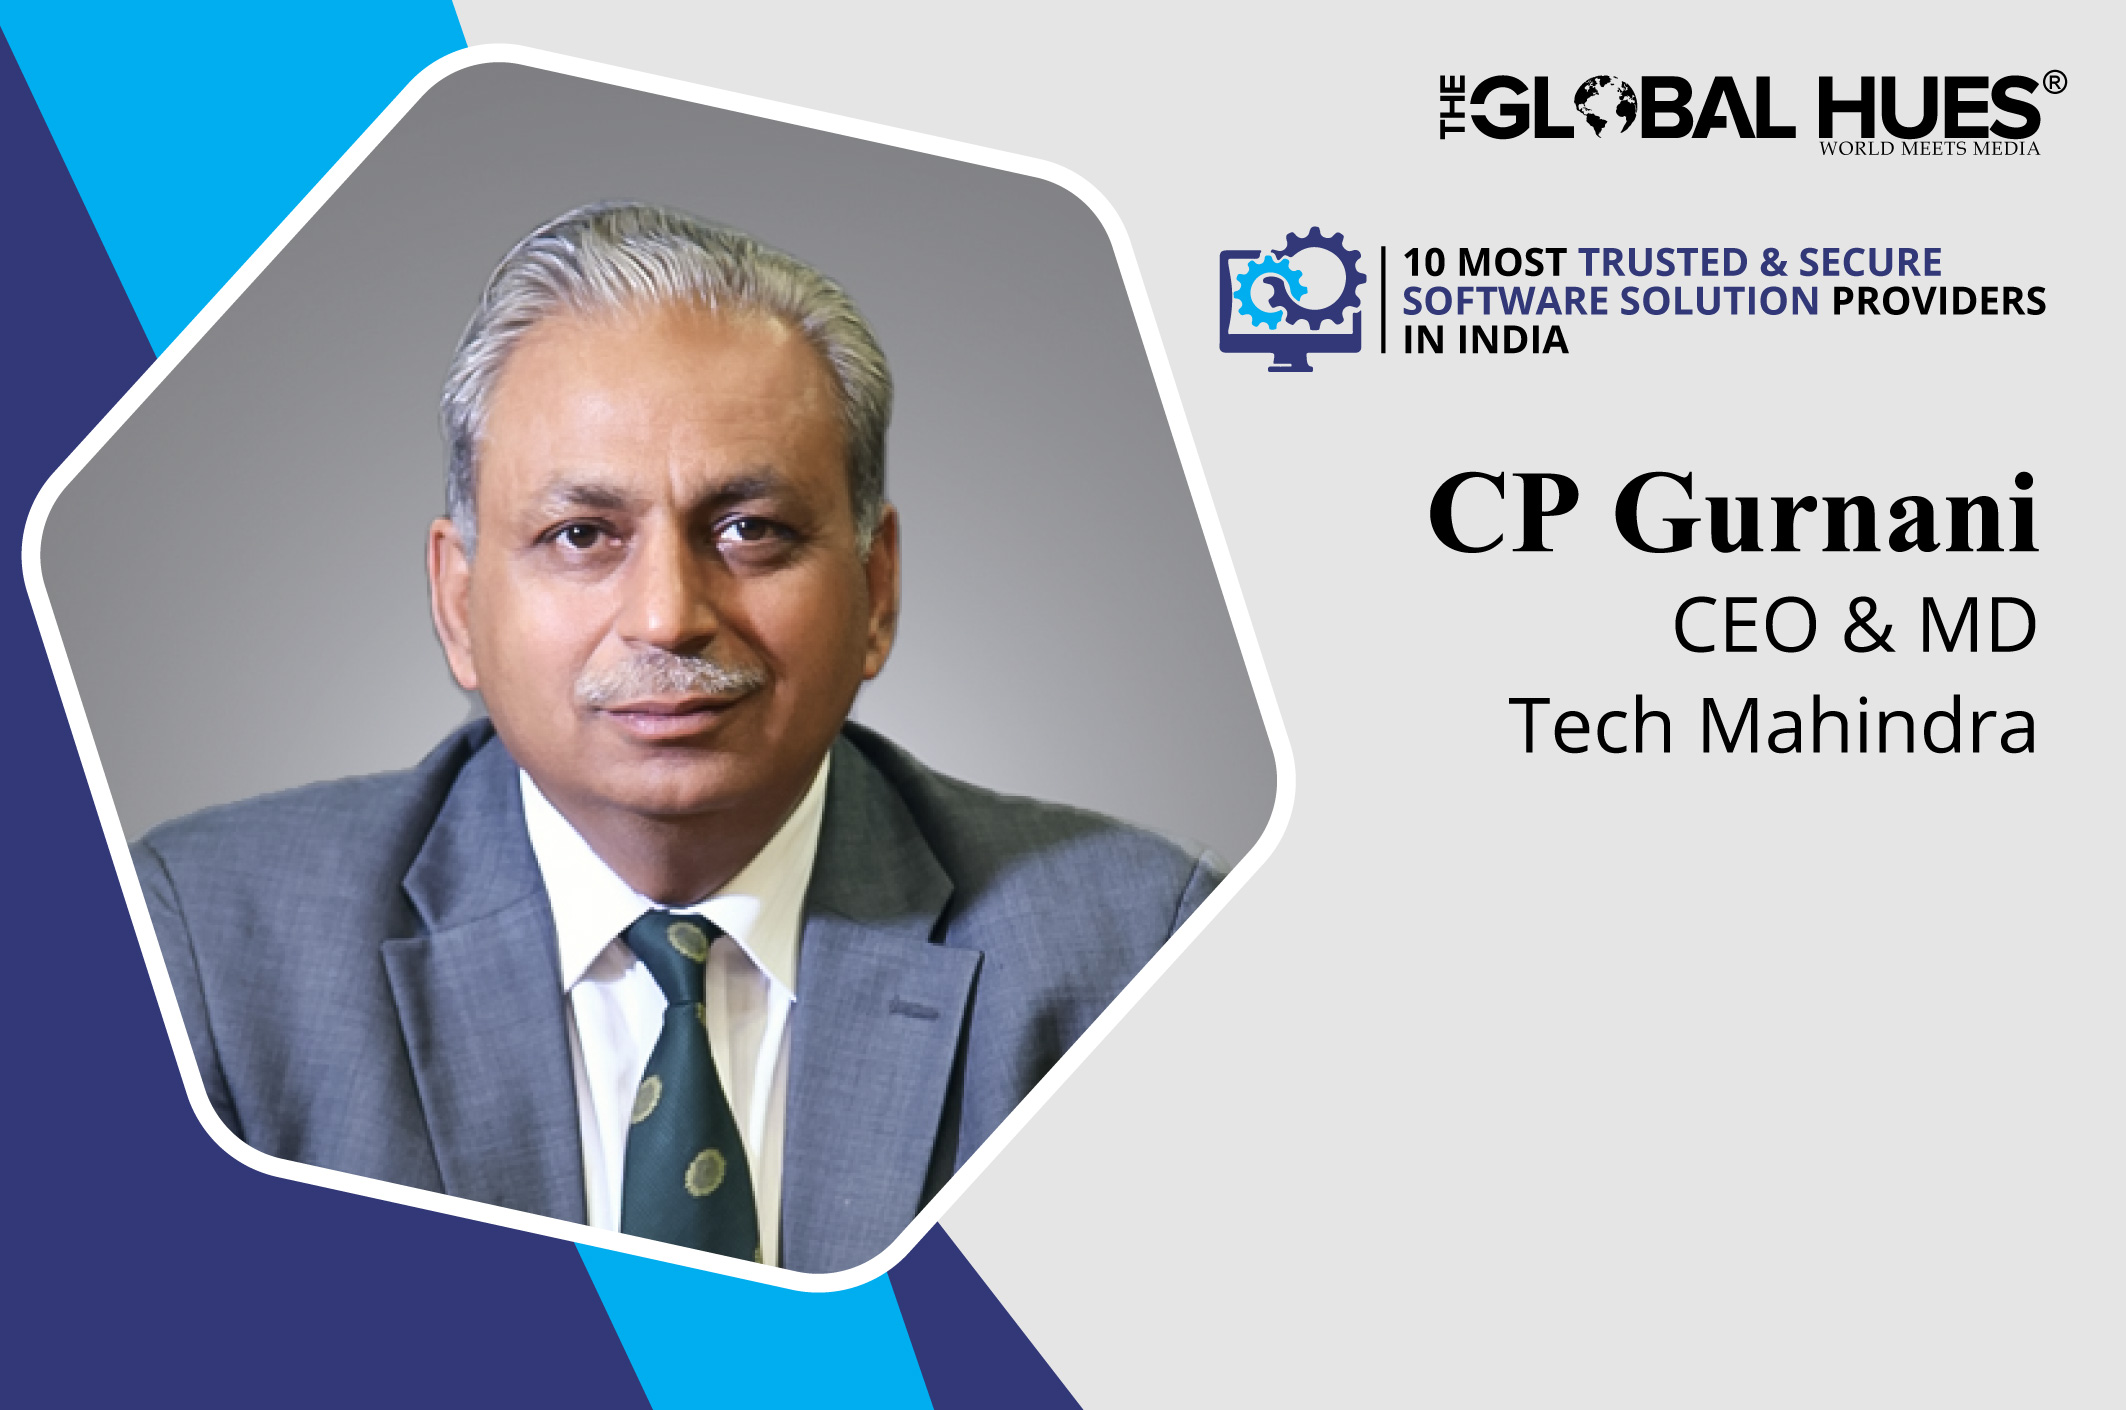 CP Gurnani Ceo & MD Tech Mahindra